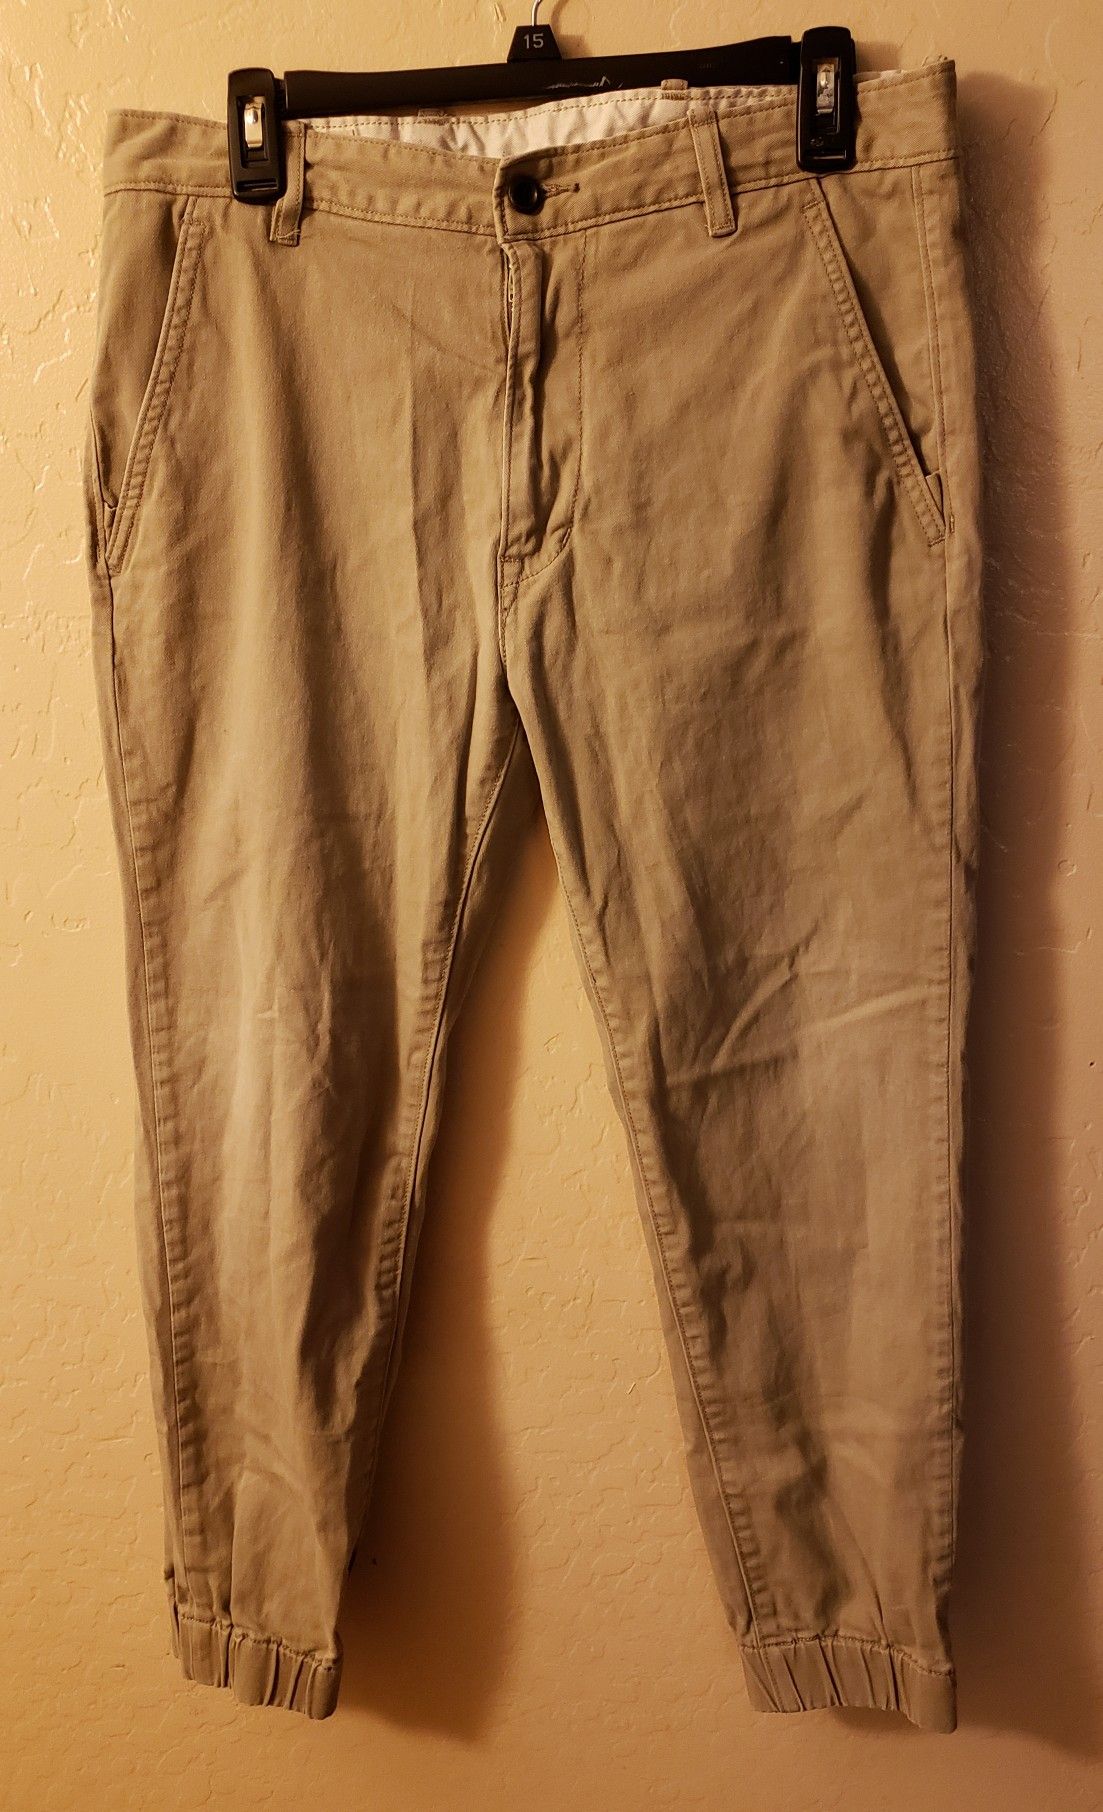 Jogger Khaki Uniform Pants 32x30